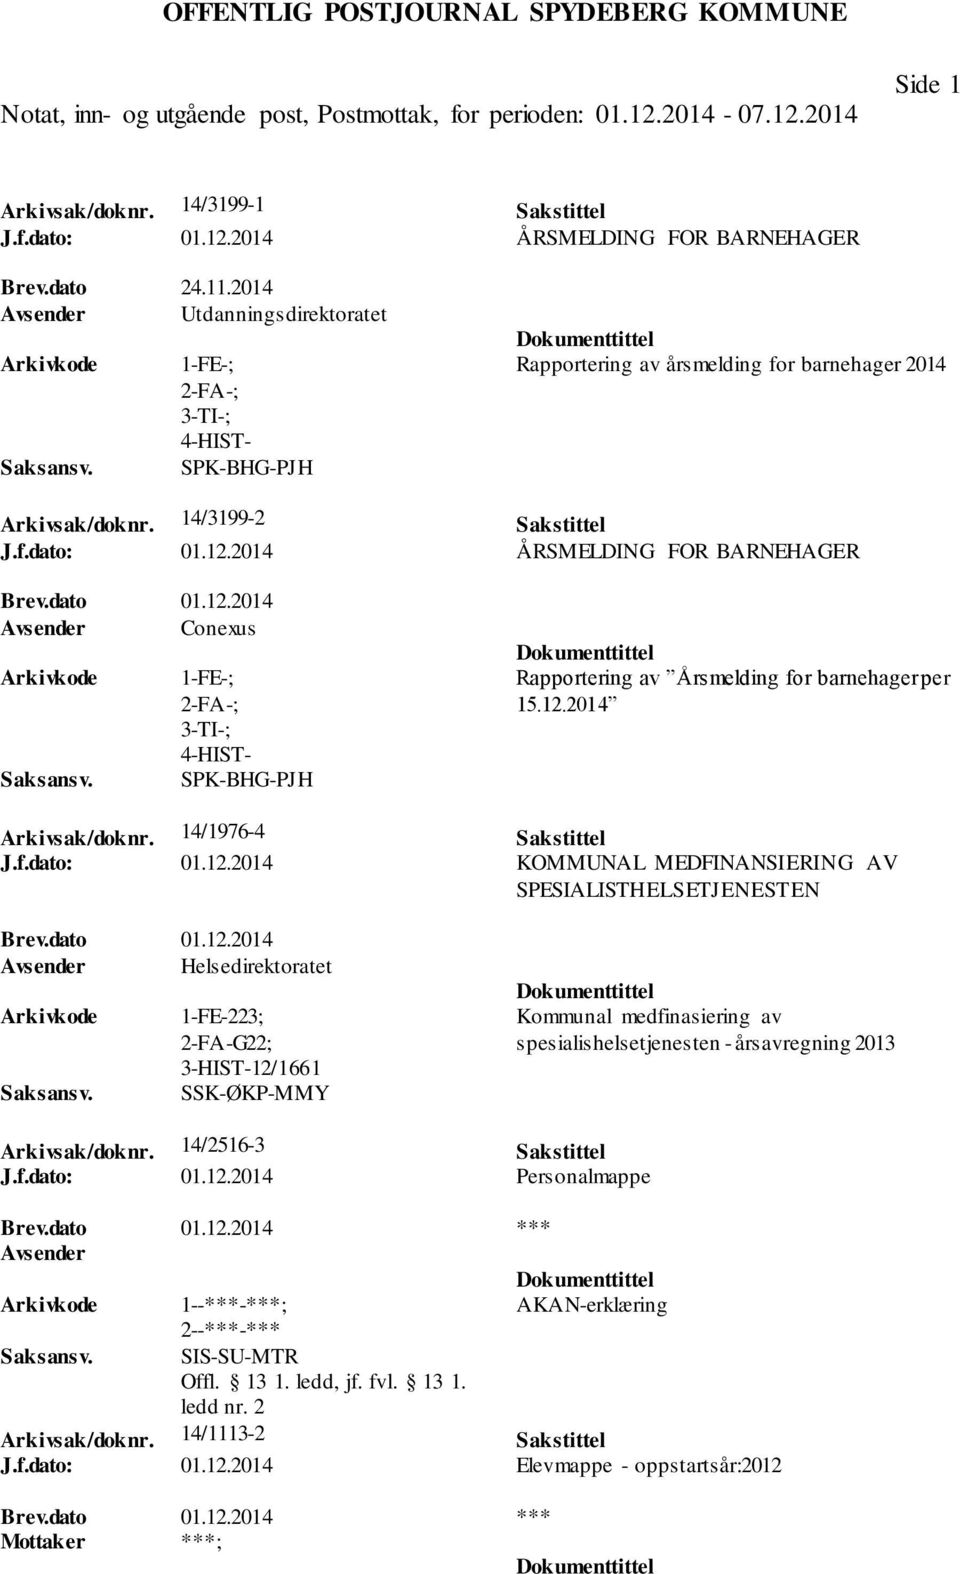 2014 ÅRSMELDING FOR BARNEHAGER Brev.dato 01.12.2014 Avsender Conexus 1-FE-; 2-FA-; 3-TI-; 4-HIST- SPK-BHG-PJH Rapportering av Årsmelding for barnehager per 15.12.2014 Arkivsak/doknr.